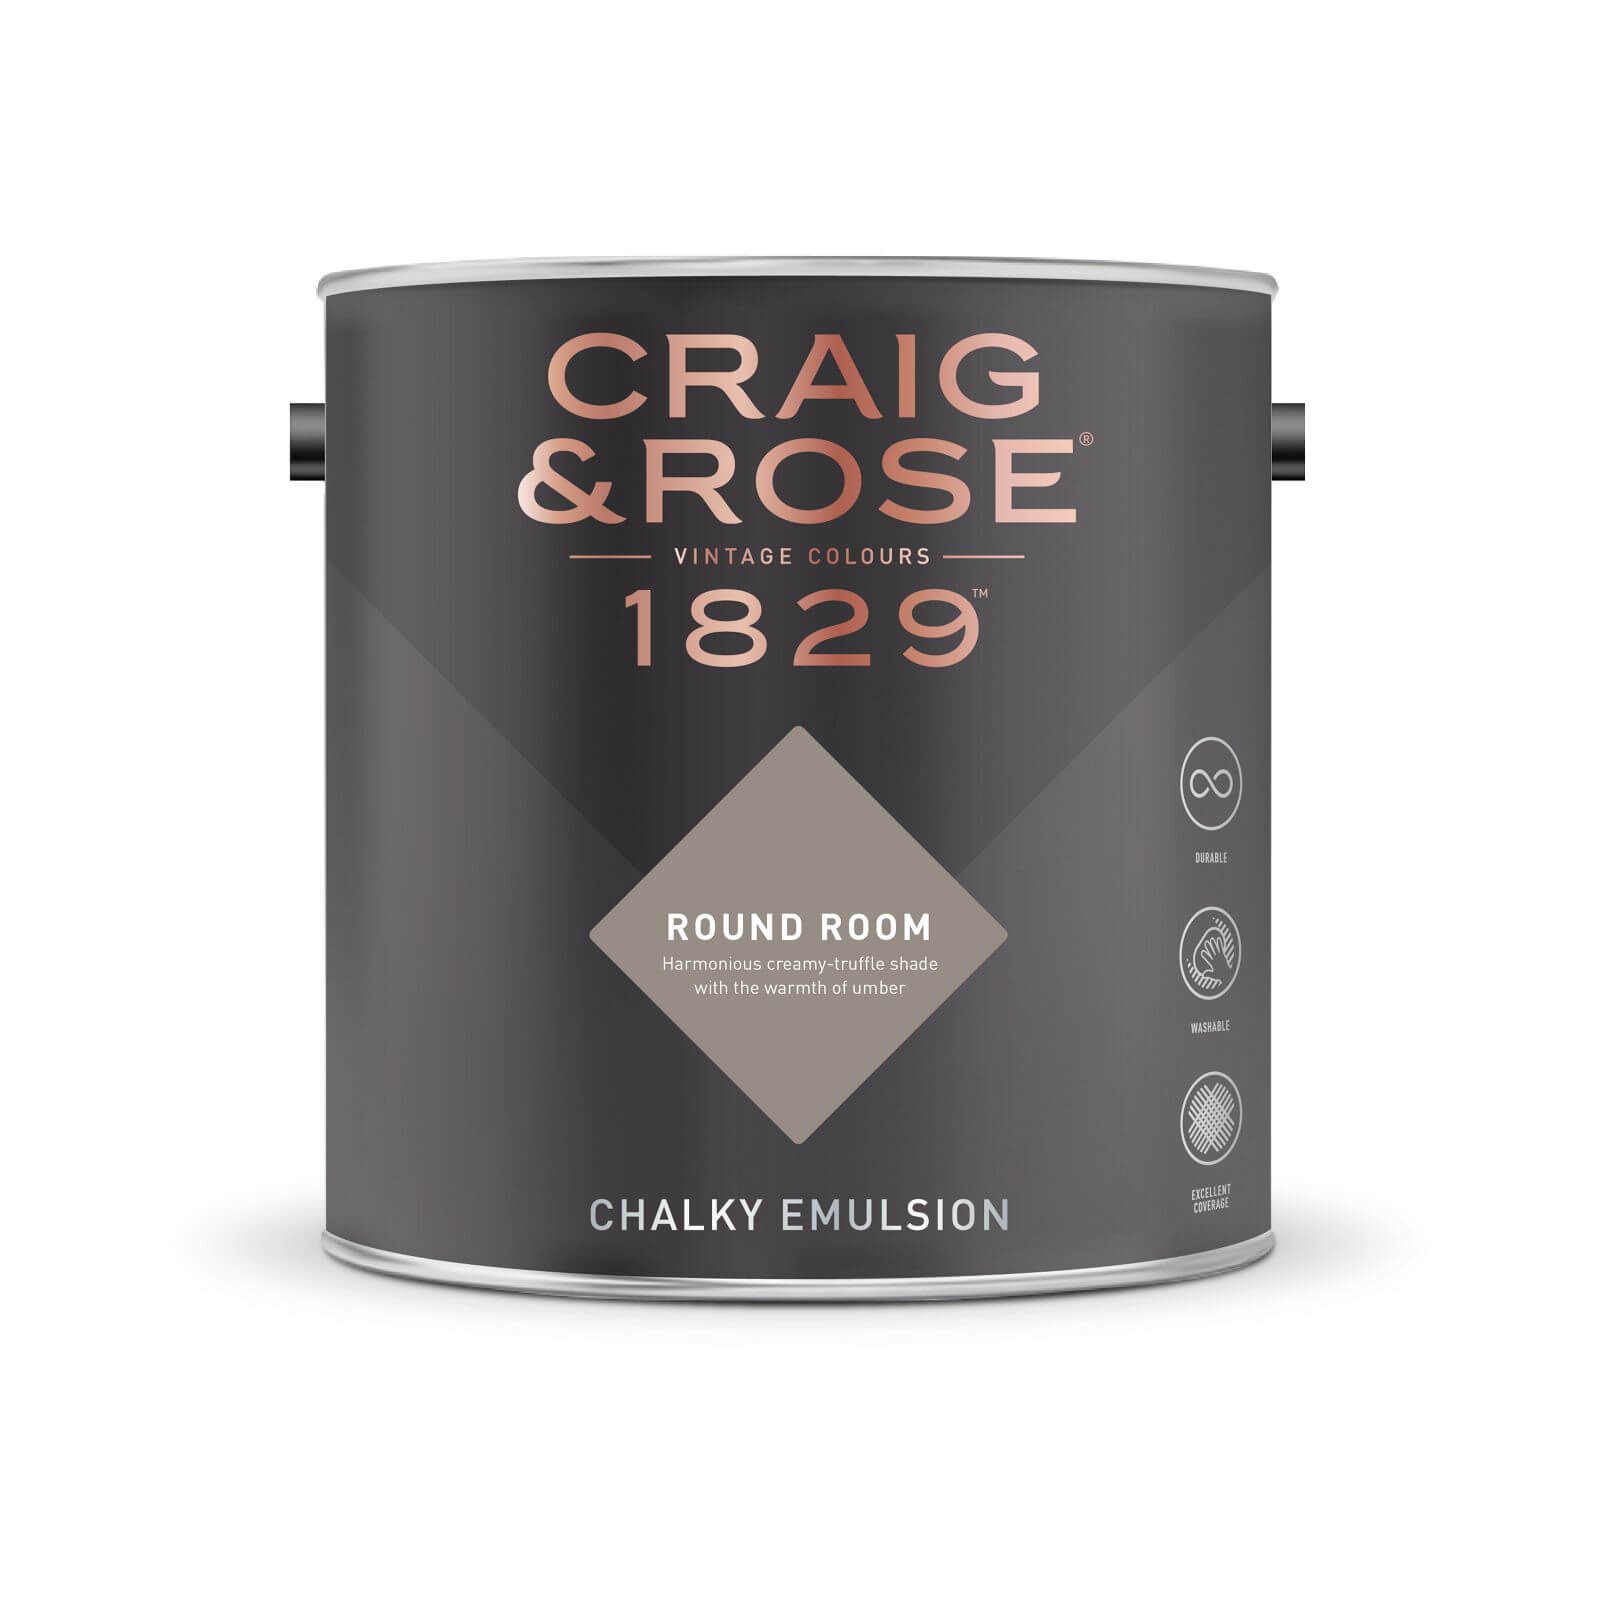 Craig & Rose 1829 Chalky Emulsion Round Room - Tester 50ml